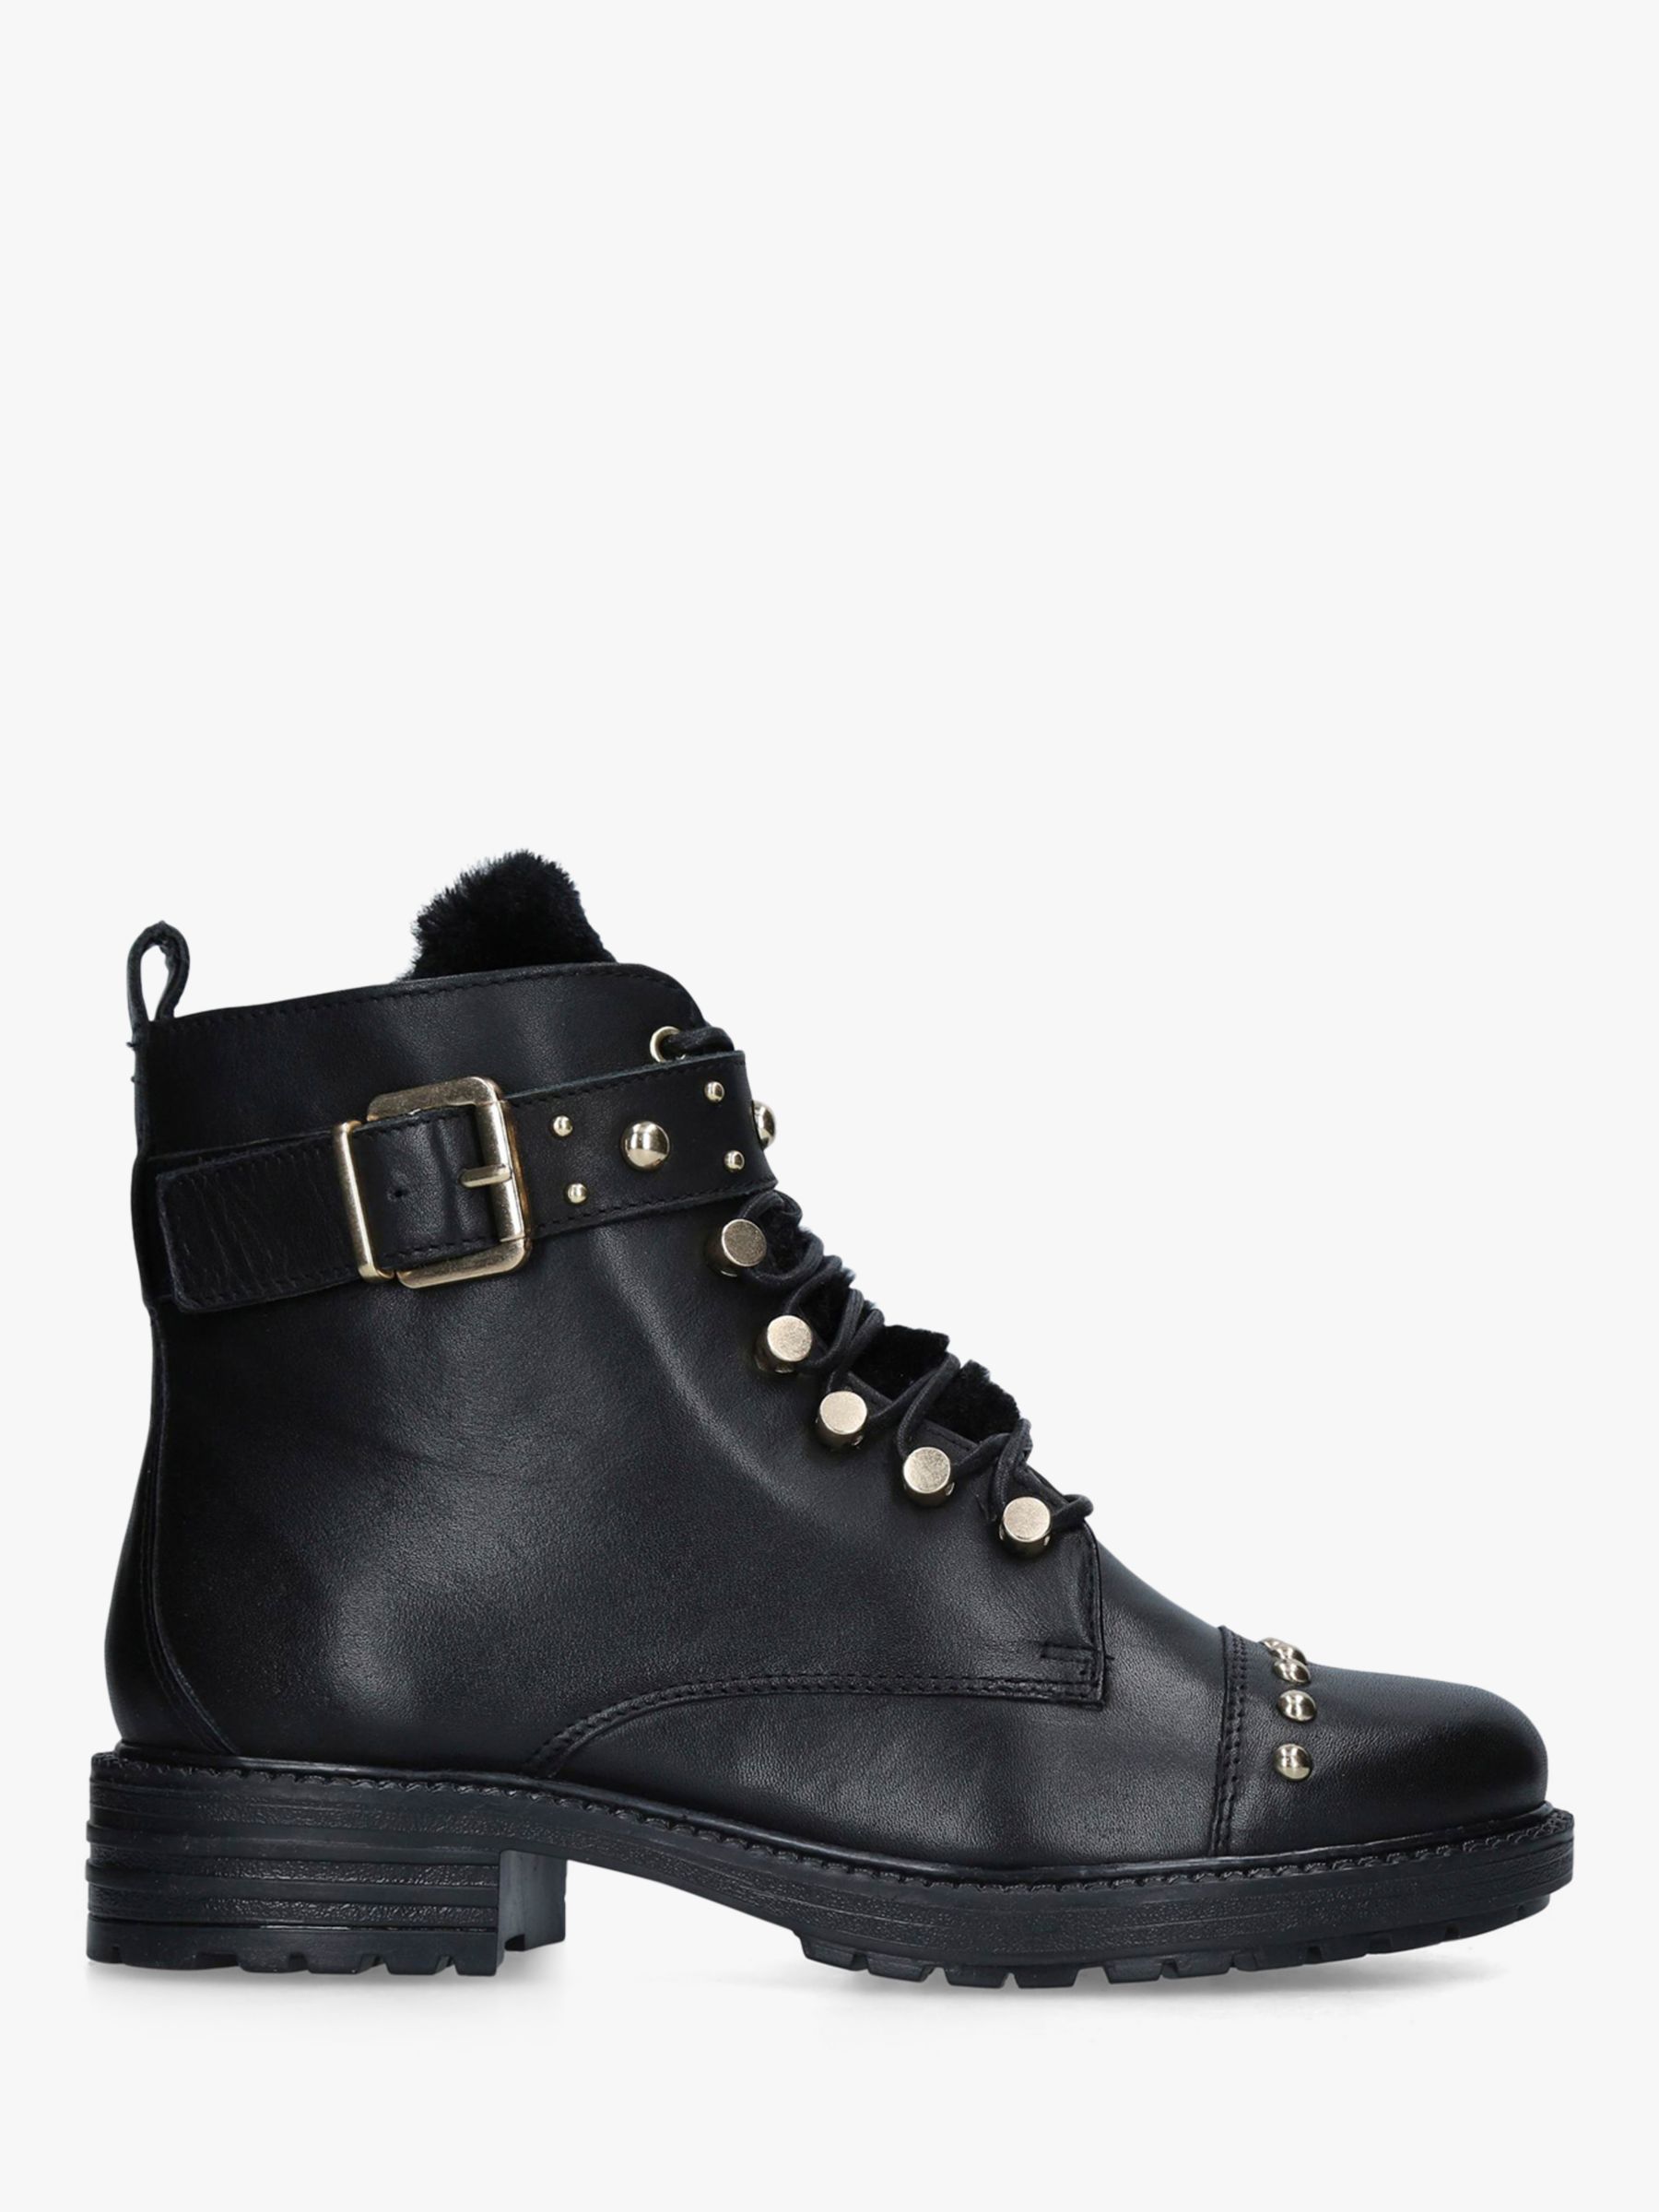 Carvela Sonny Lace Up Leather Ankle Boots, Black at John Lewis & Partners